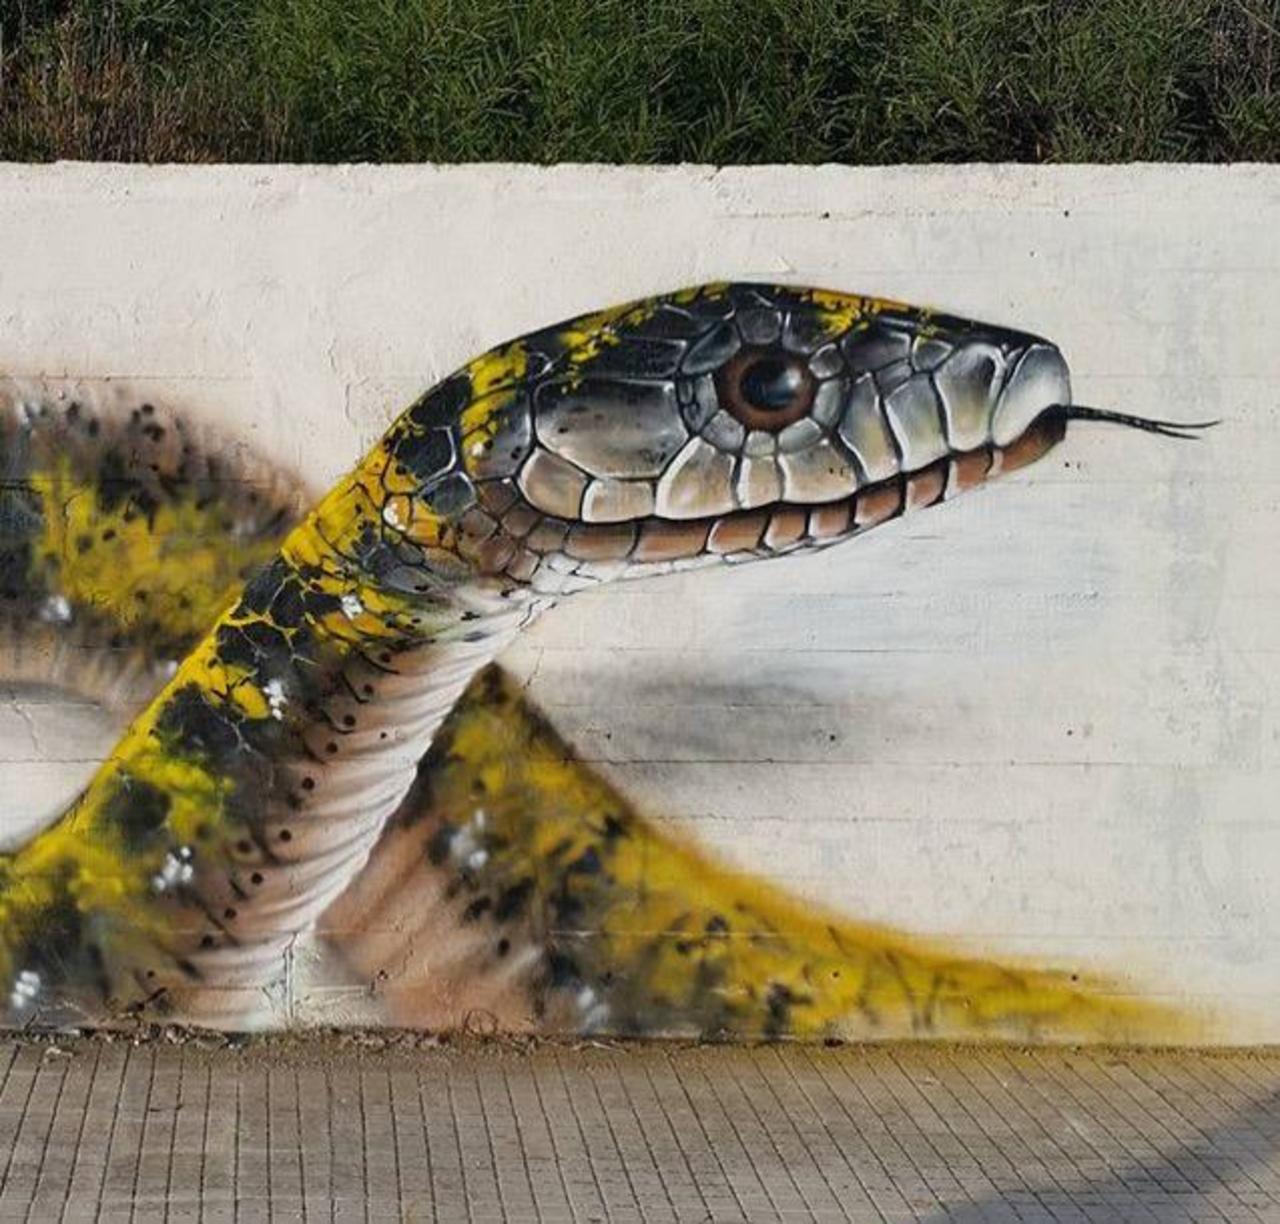 RT @GoogleStreetArt: Street Art by Cosimocheone 

#art #graffiti #mural #streetart http://t.co/GOqx1jqHUk